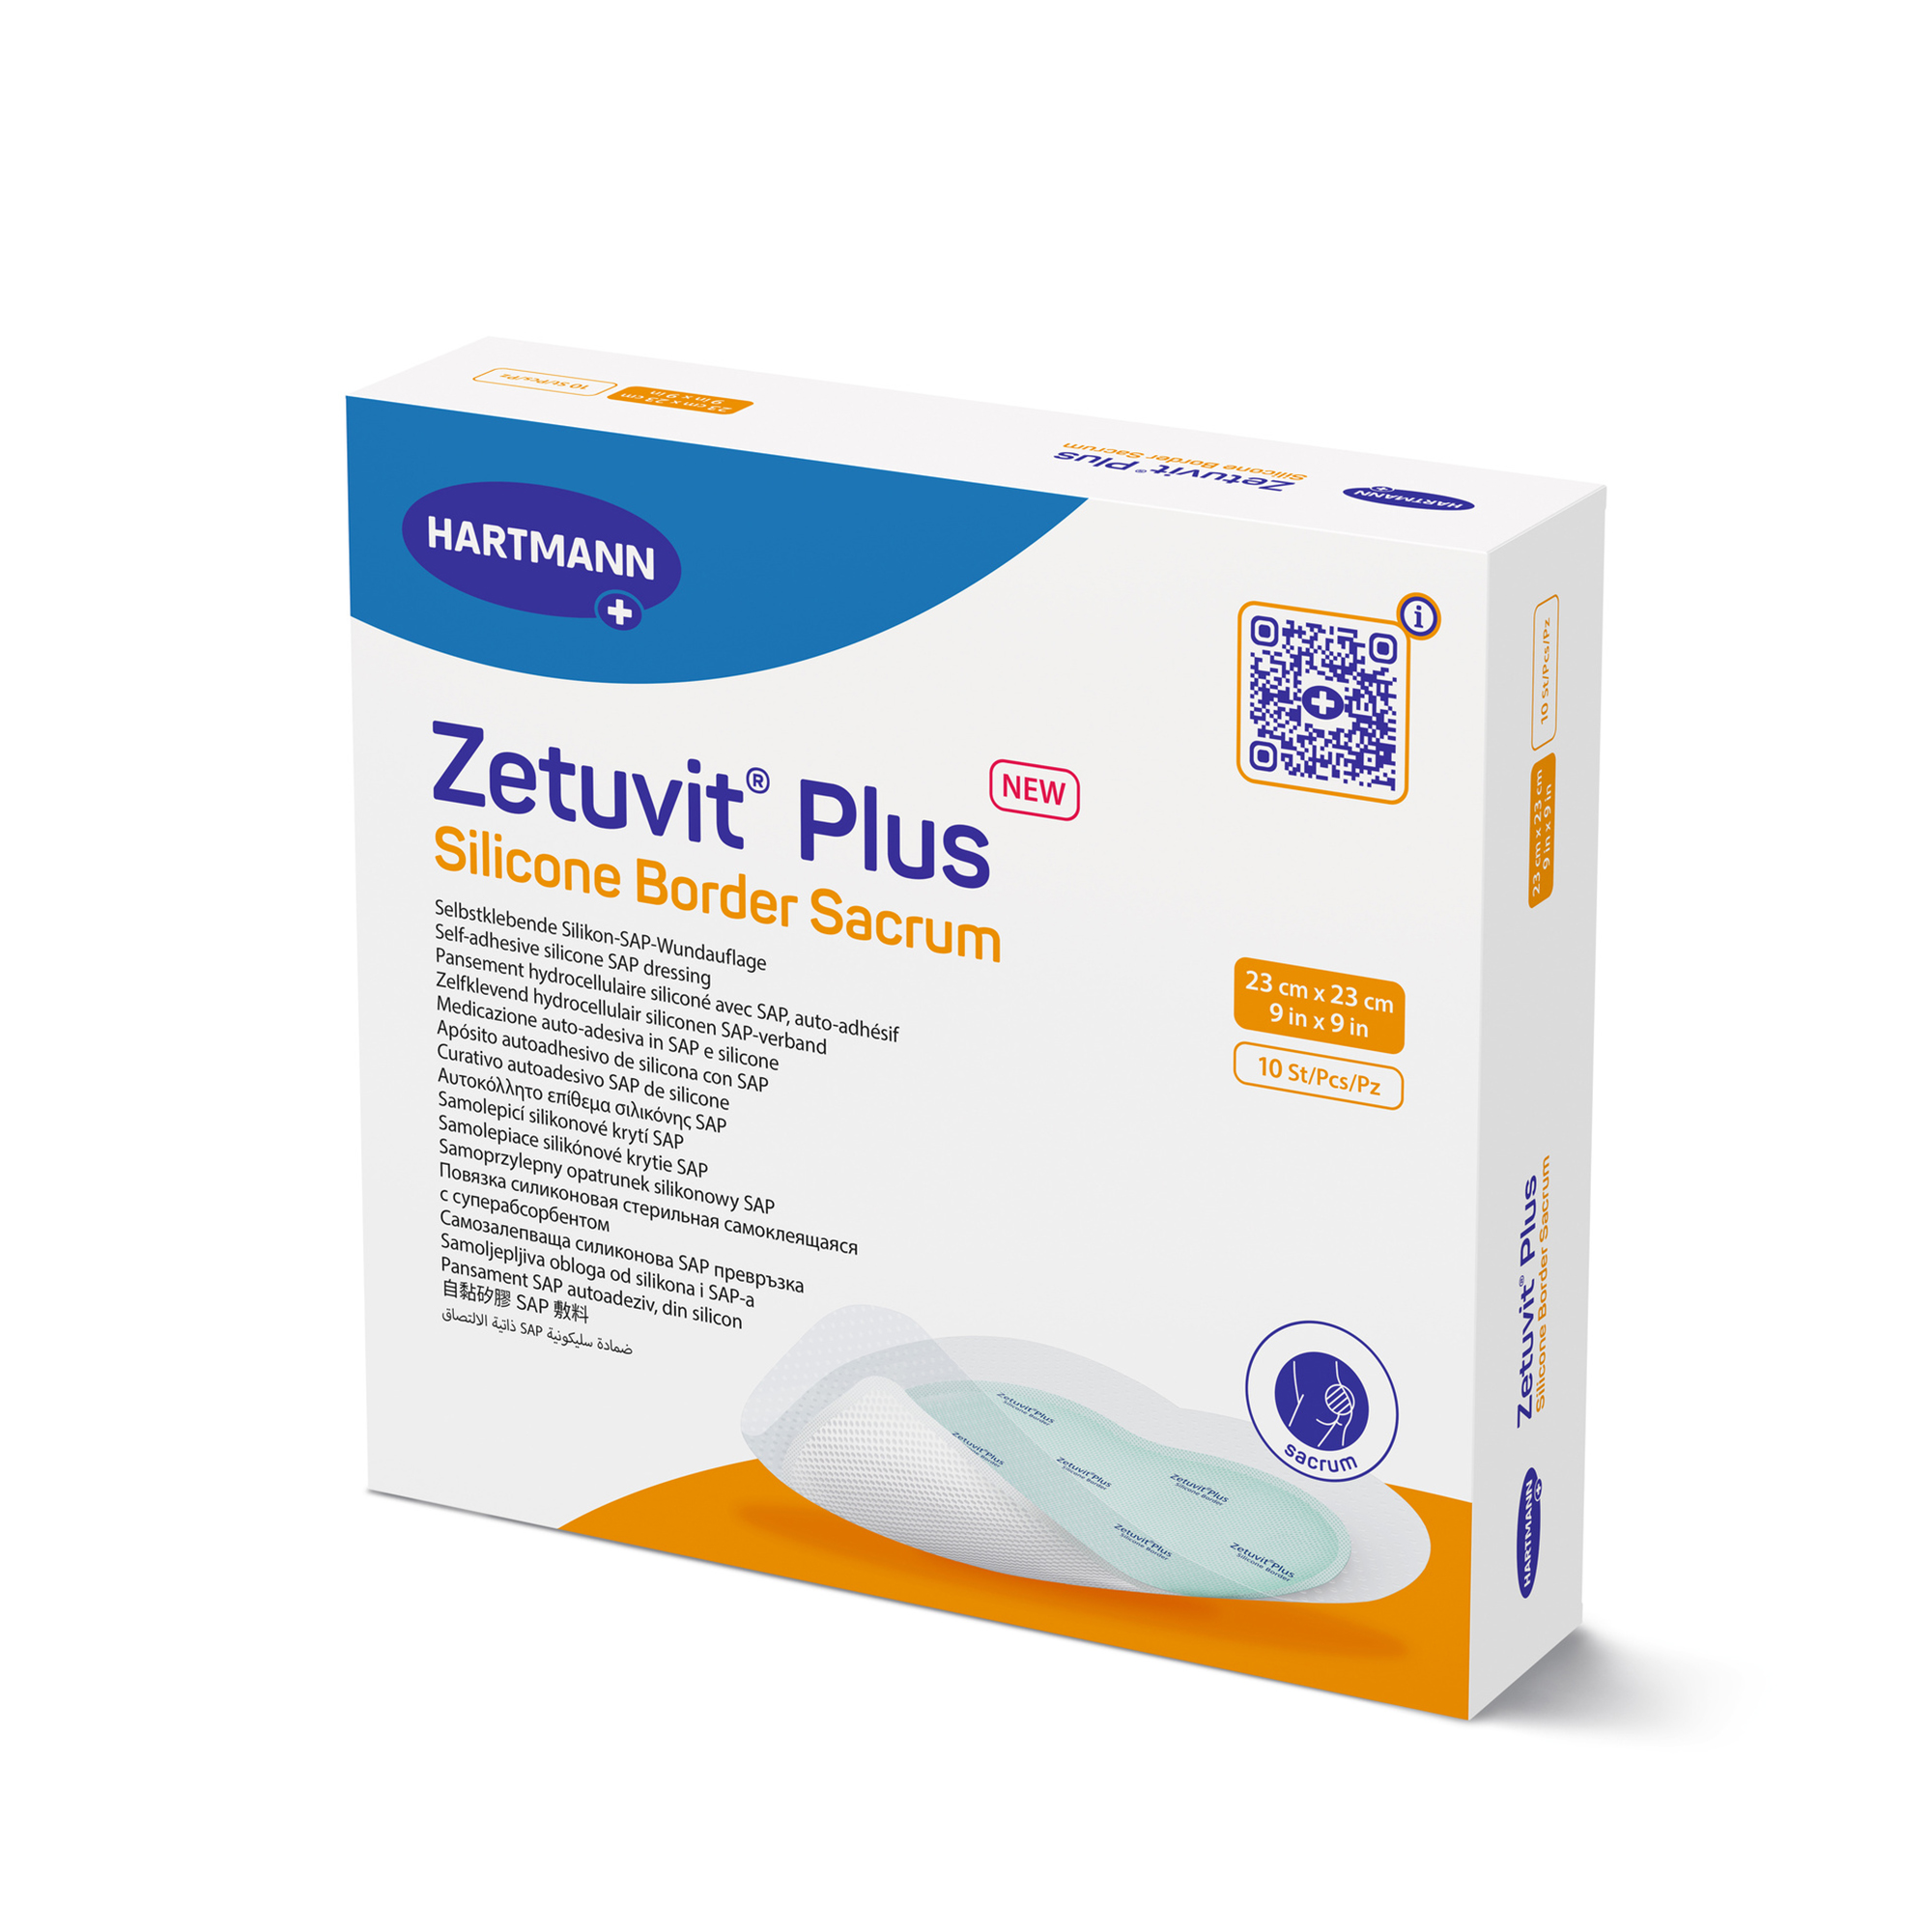 Hartmann Zetuvit® Plus Silicone Border 18 x 18 cm Sacrum, sterile, individually